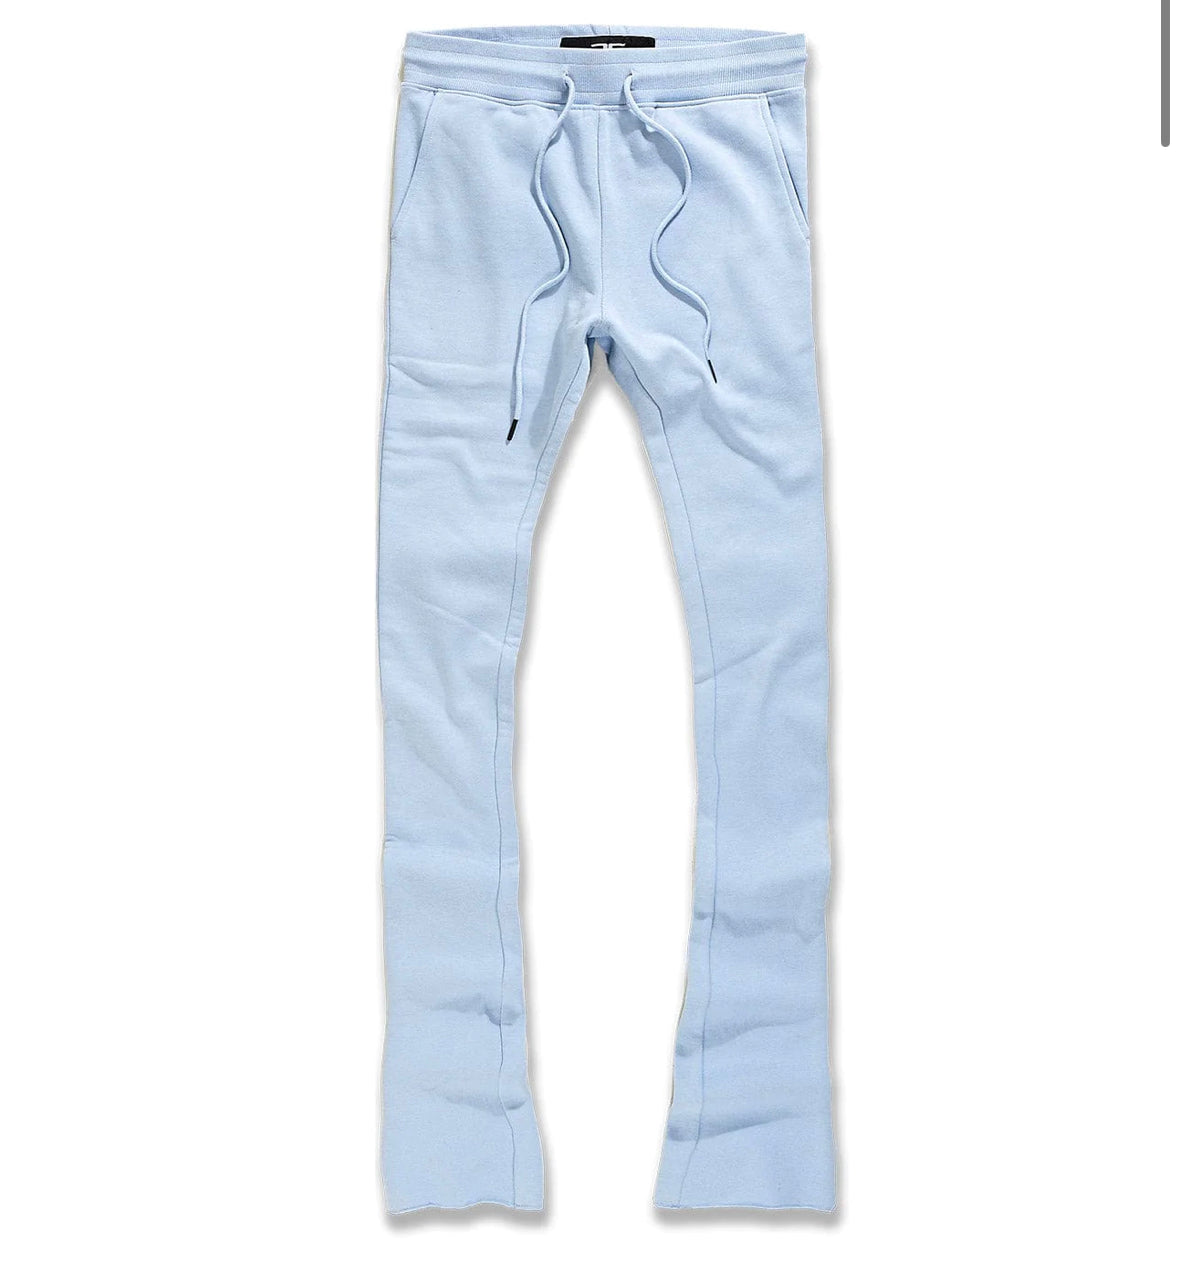 Jordan craig long stack fleece pants Carolina Blue 8826l